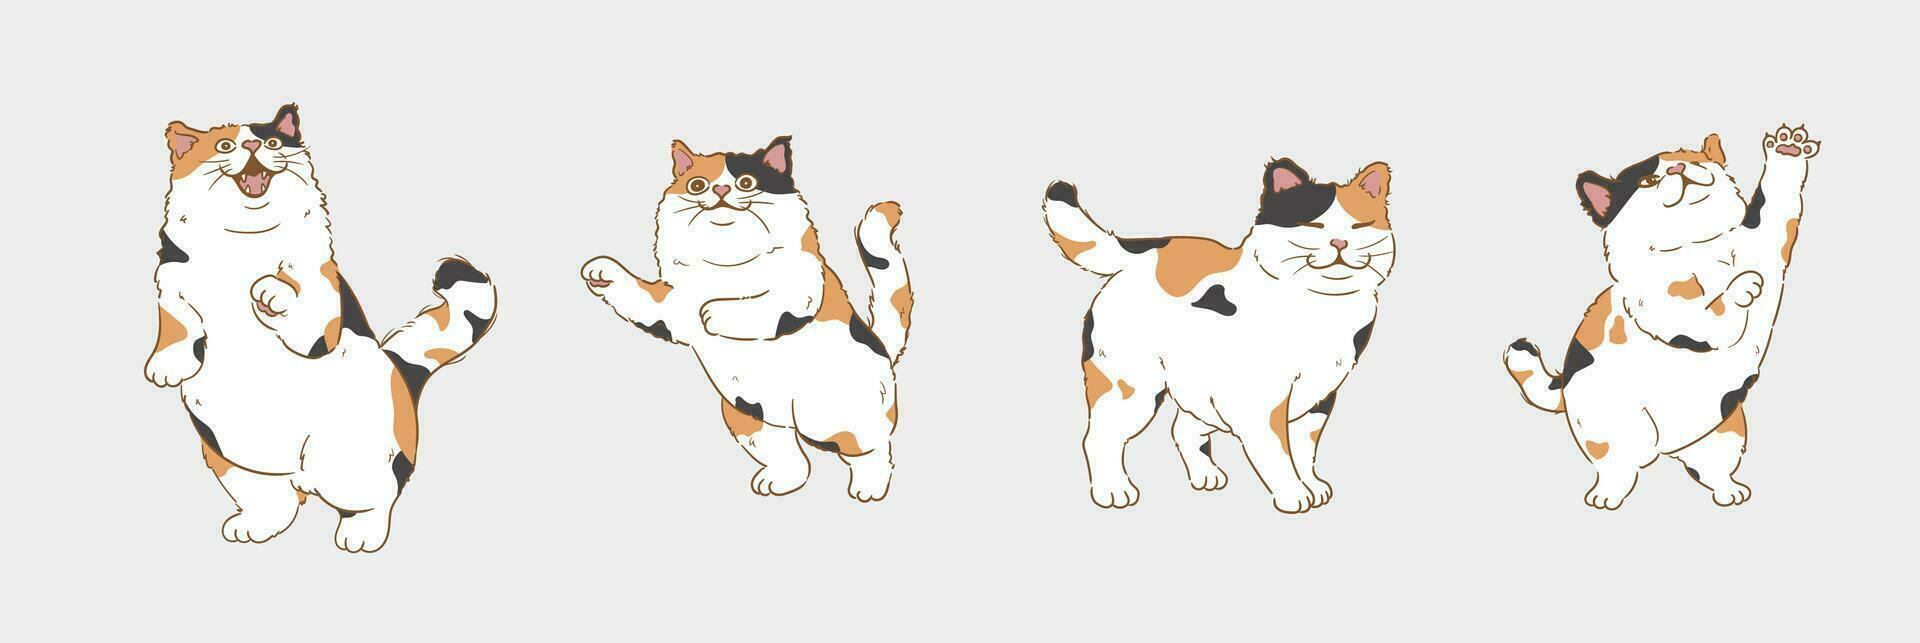 dibujos animados felizj calicó gato conjunto vector